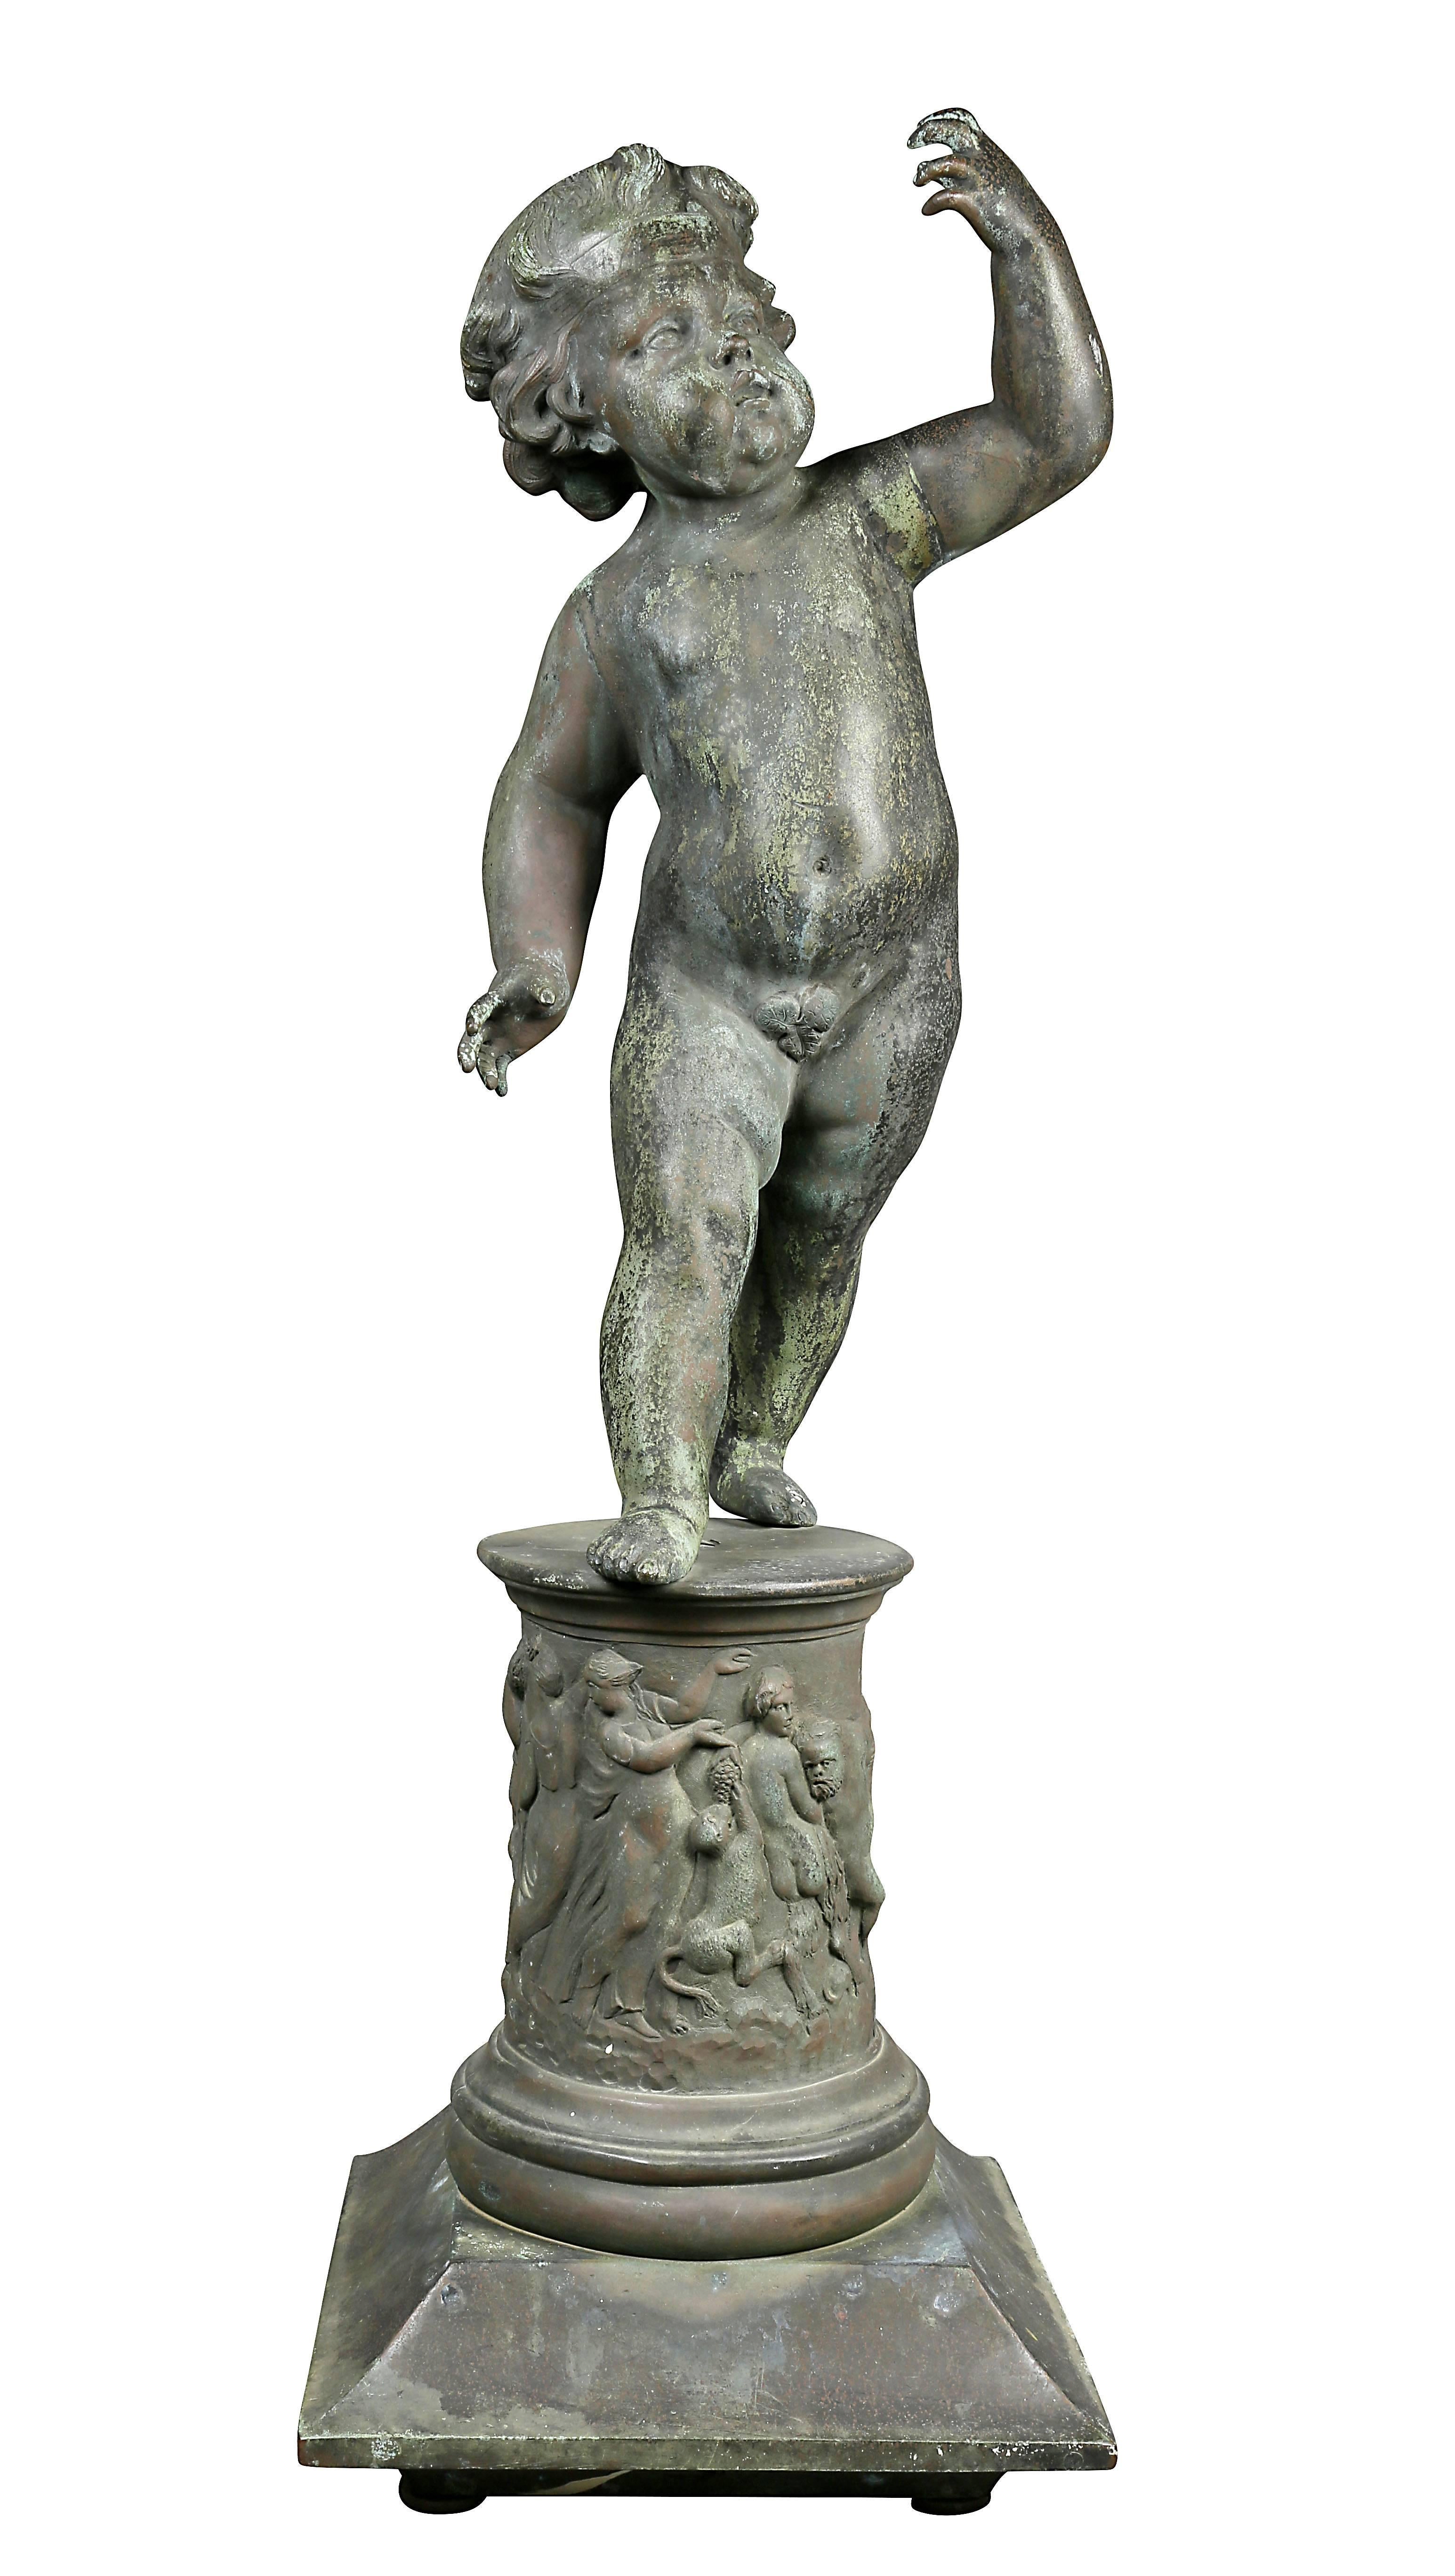 European Classical Revival Figure of a Cherub